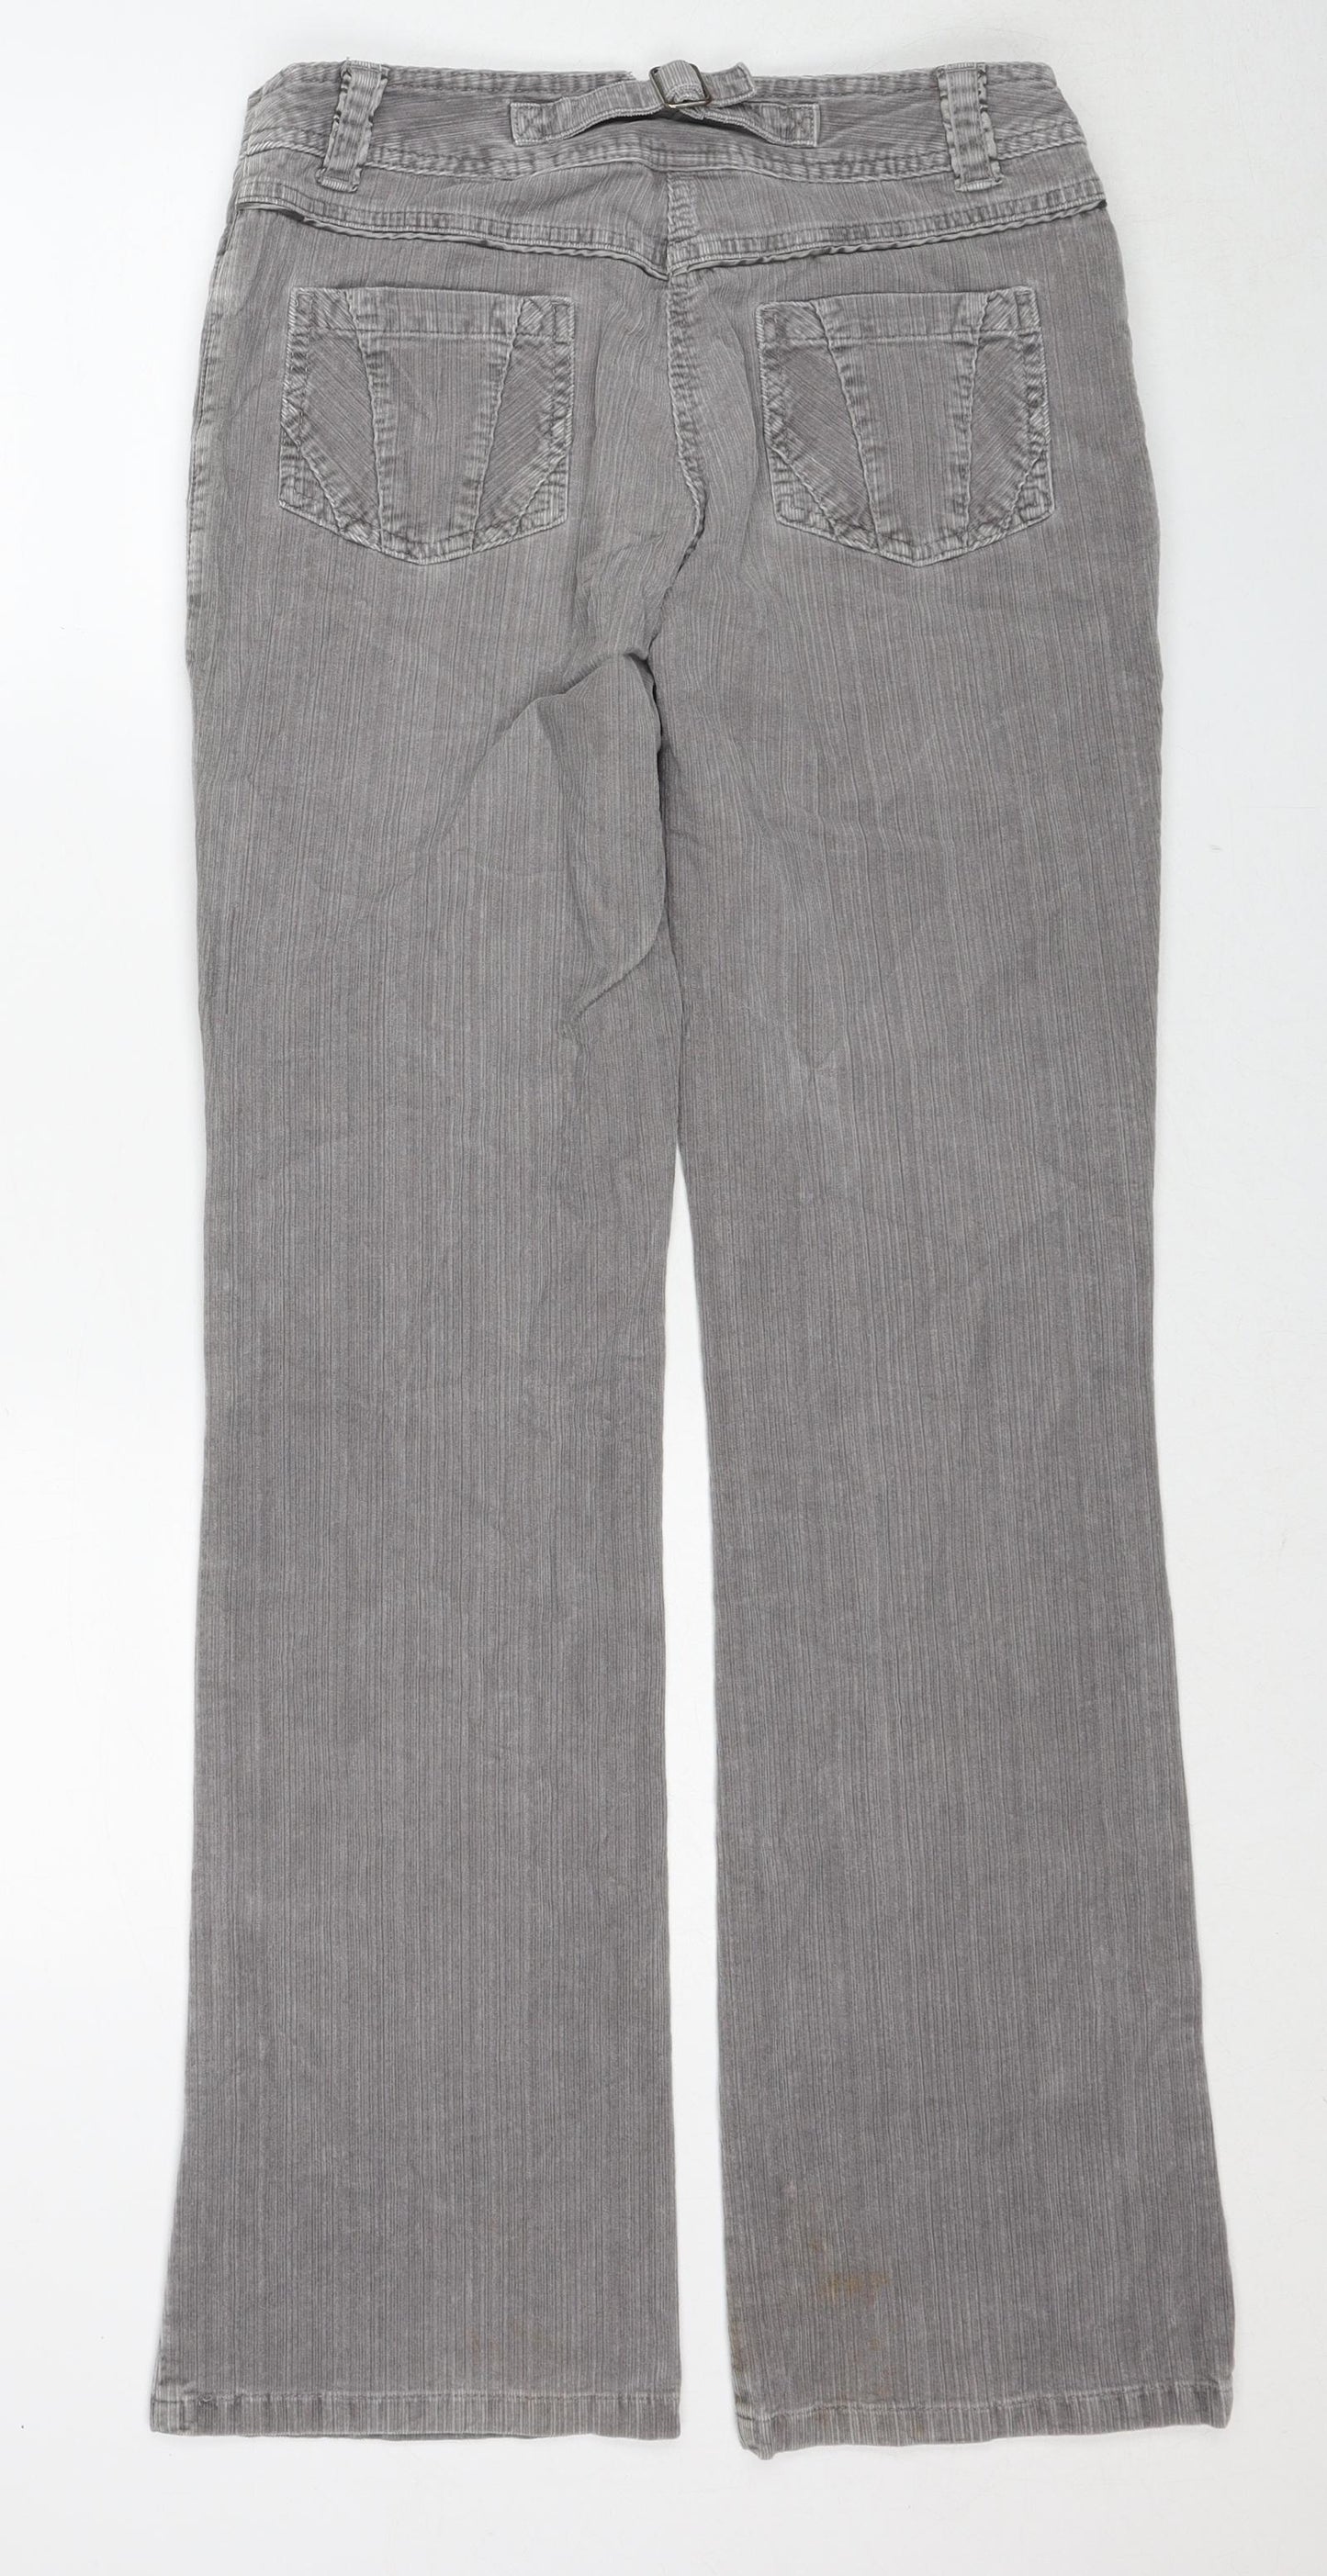 NEXT Womens Grey Cotton Trousers Size 10 Regular Zip